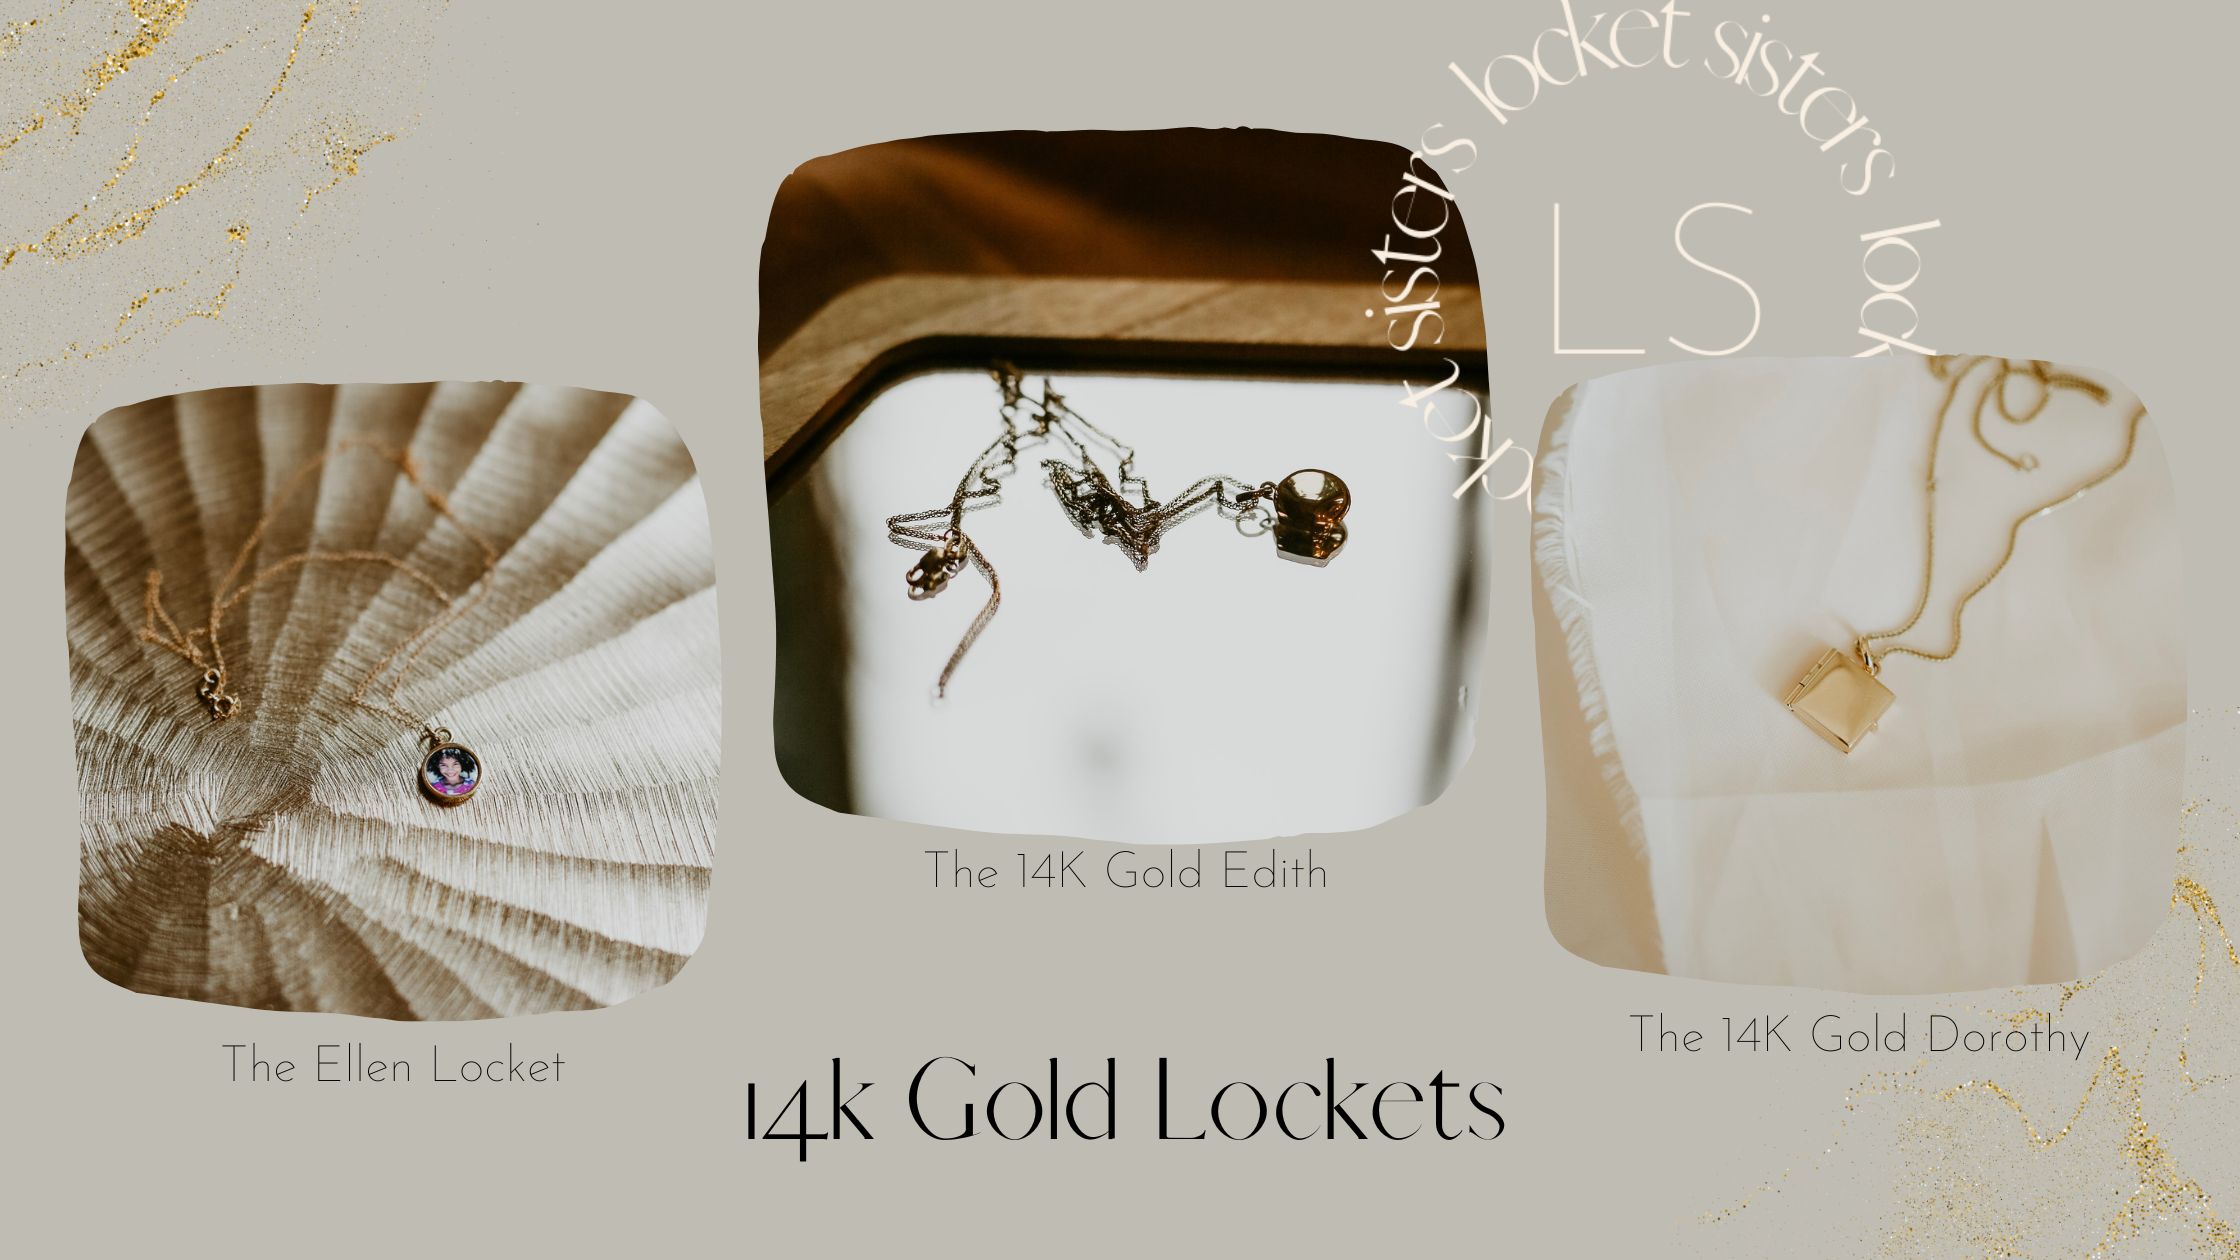 Shop our 14K Gold Lockets